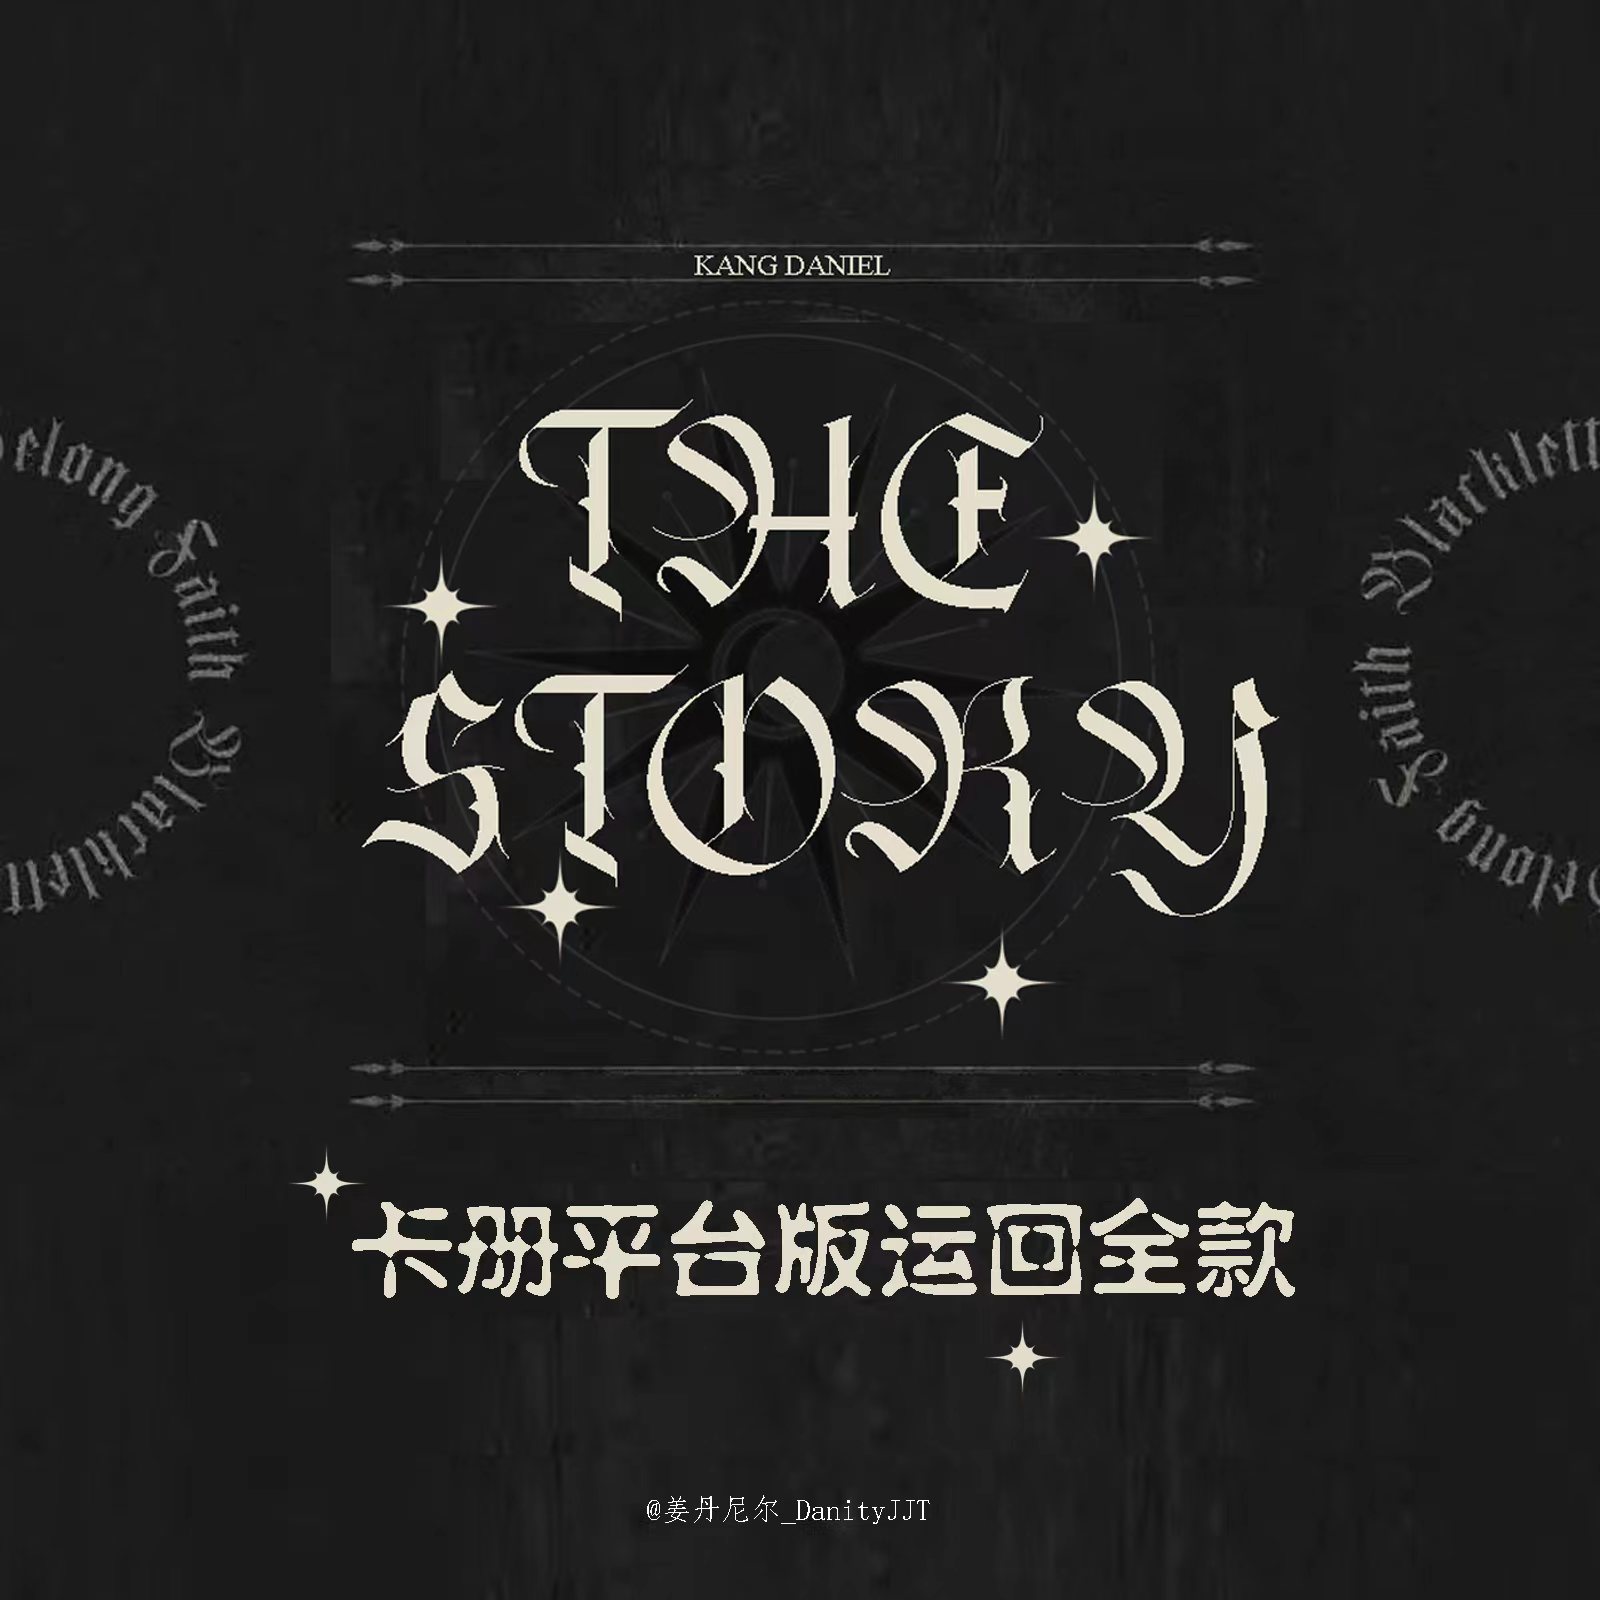 [全款 卡册平台版 特典专] KANG DANIEL - 1st Full Album [The Story] (Platform ver.)_姜丹尼尔_DanityJJT